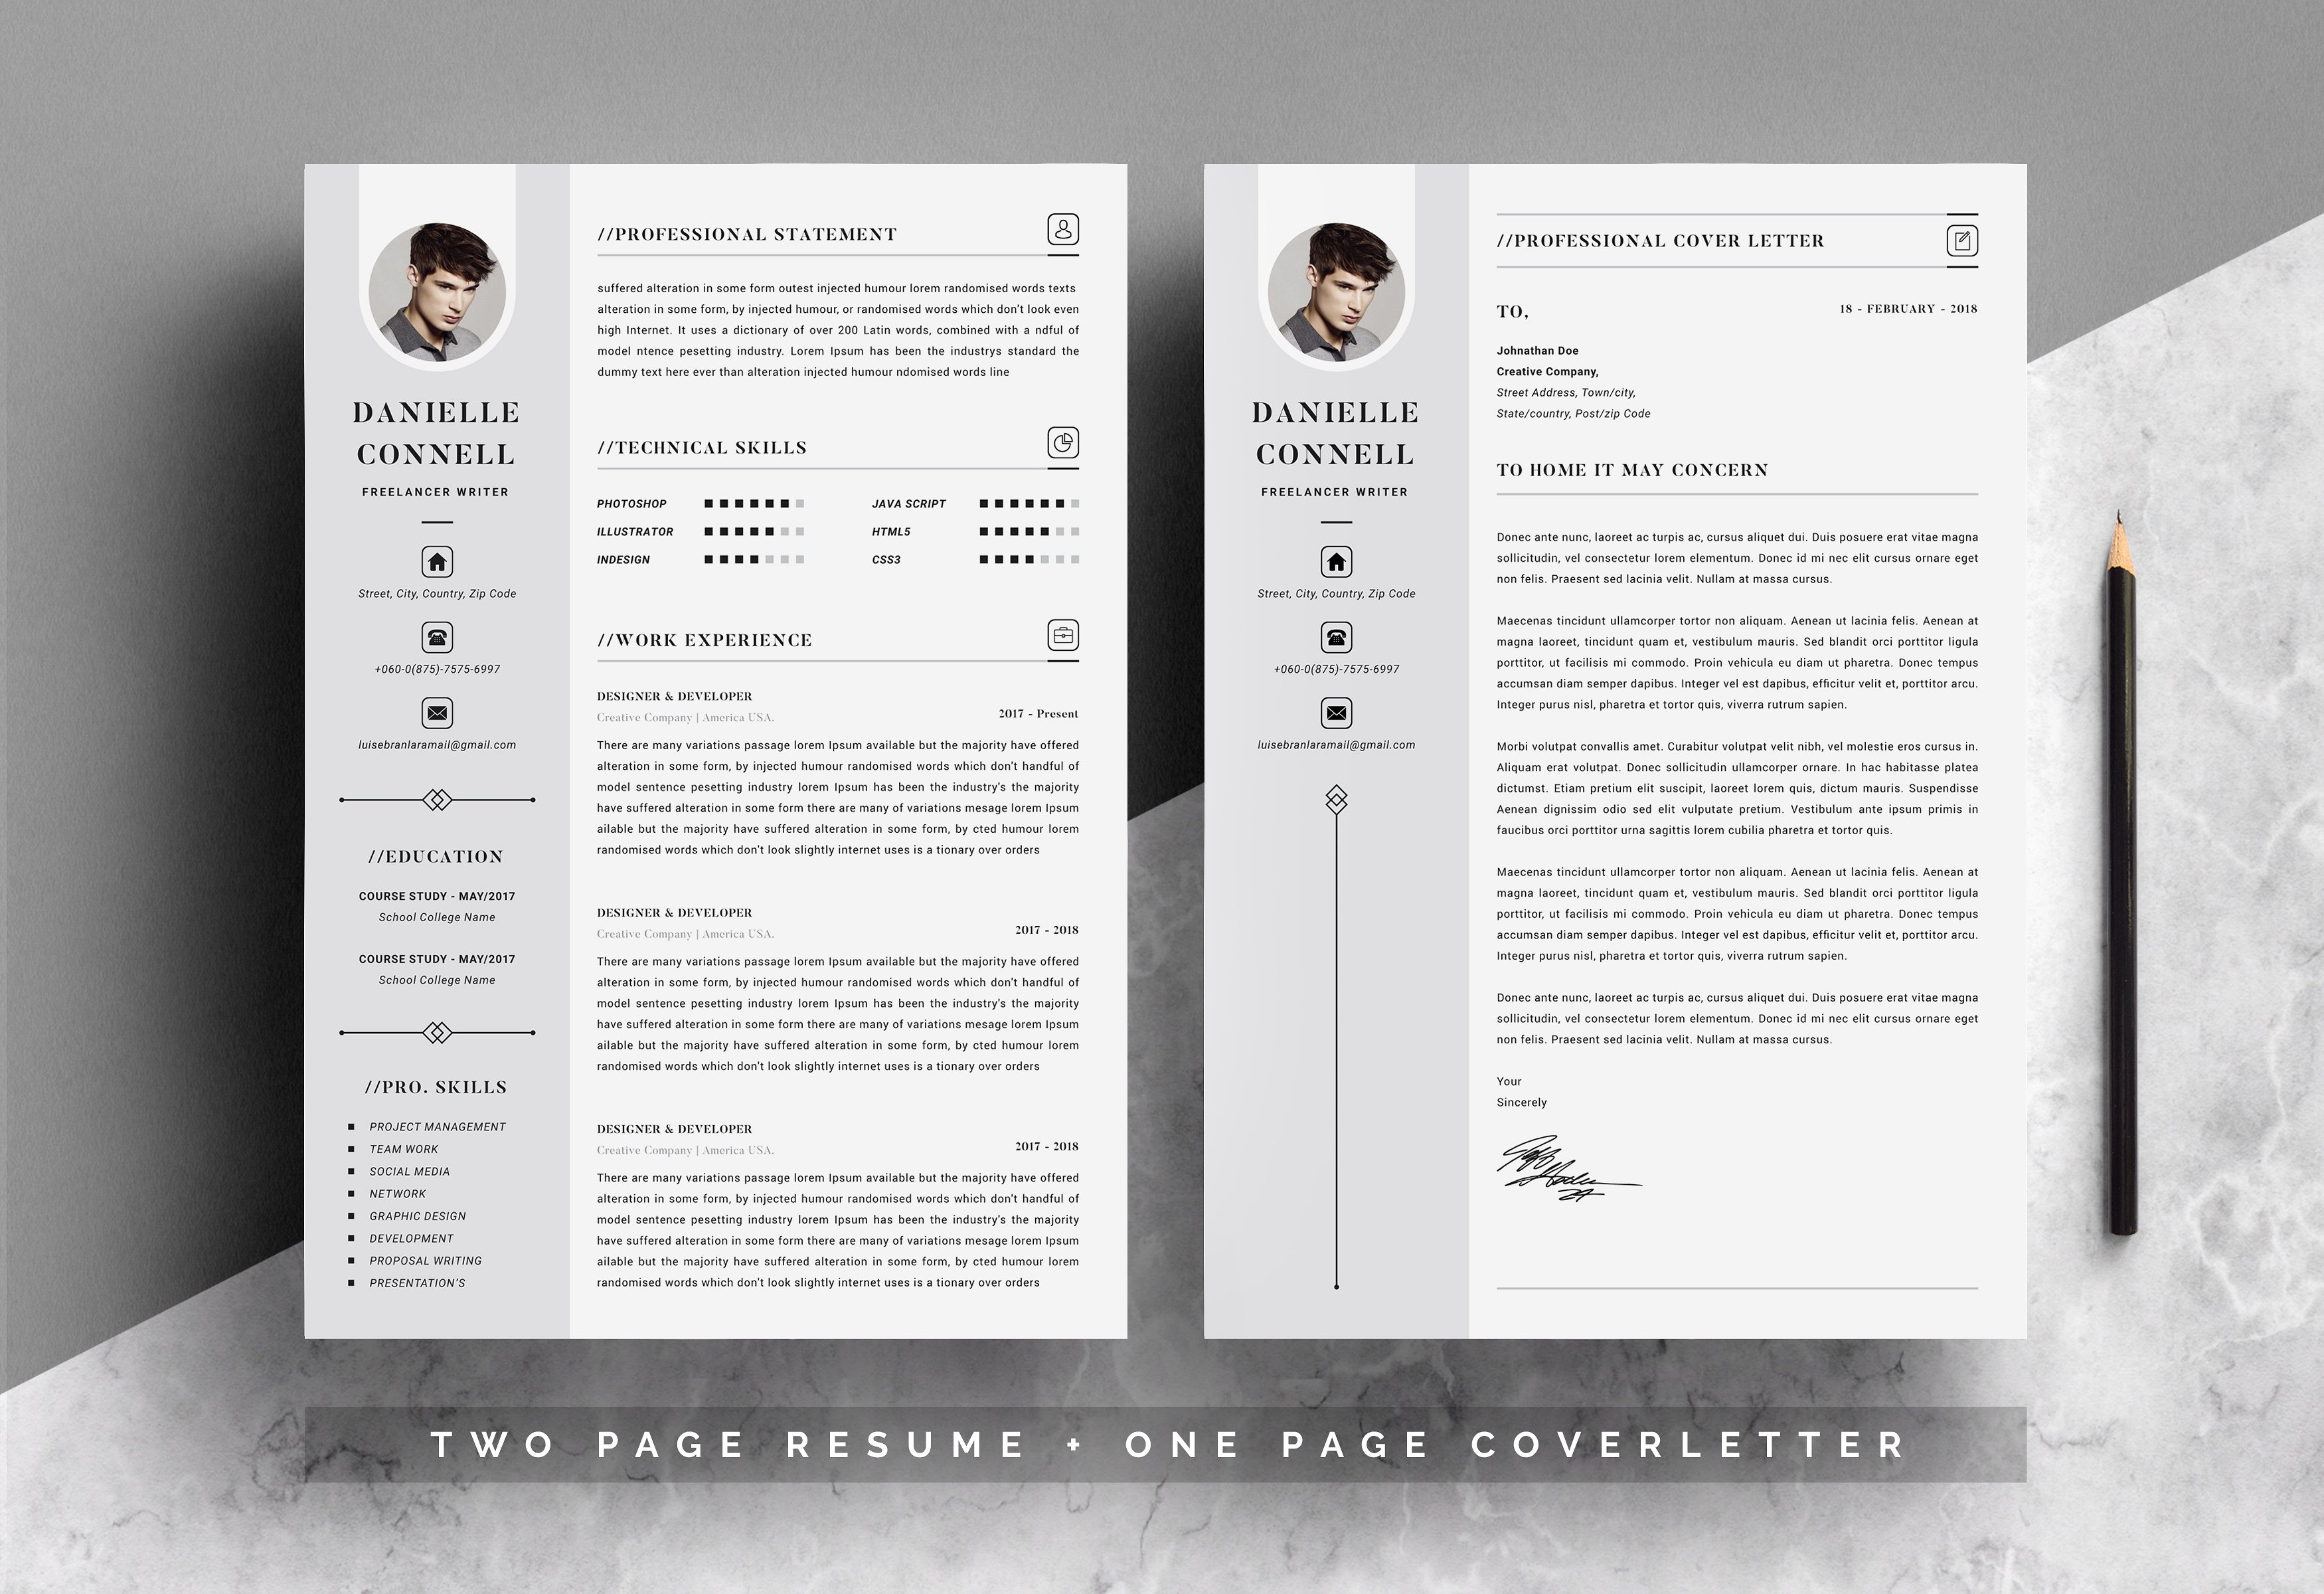 个人电子版求职简历模板 Creative Resume Template 4 Pages插图(3)